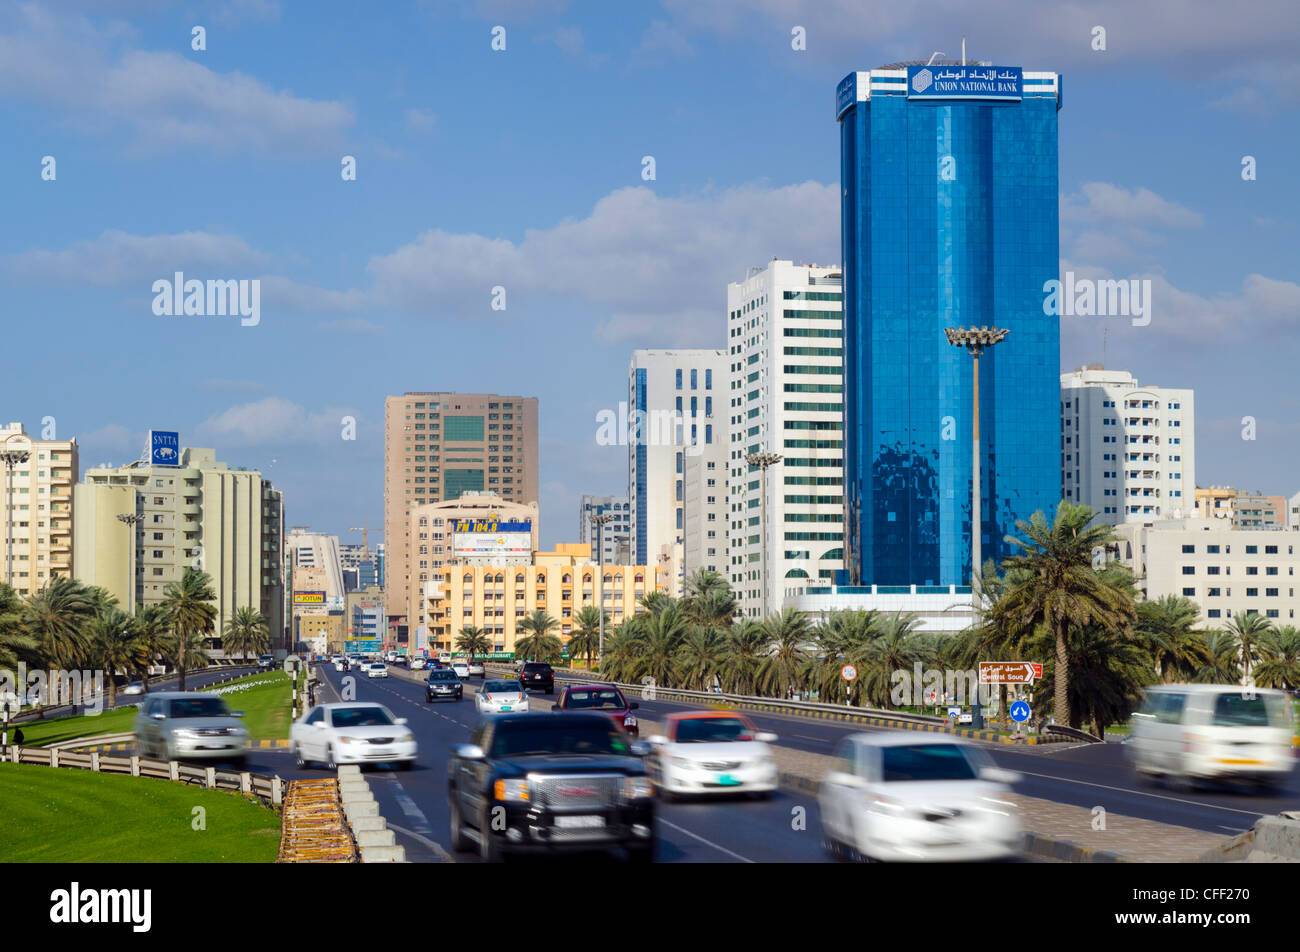 Al-Arouba Street from end of Sharjah Bridge, Sharjah, United Arab Emirates, Middle East Stock Photo